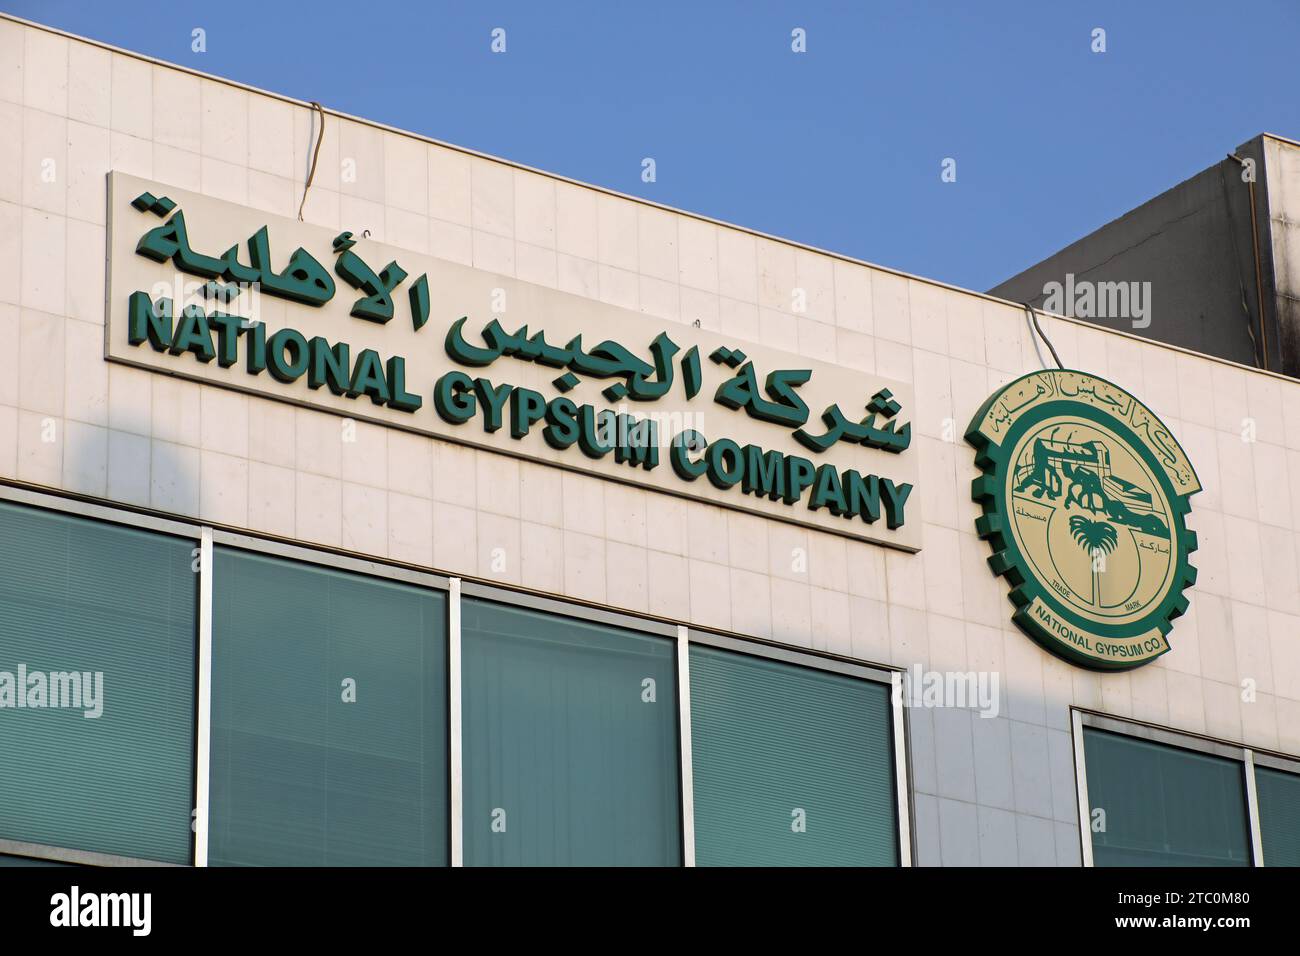 National Gypsum Company building in Riyadh Stock Photo